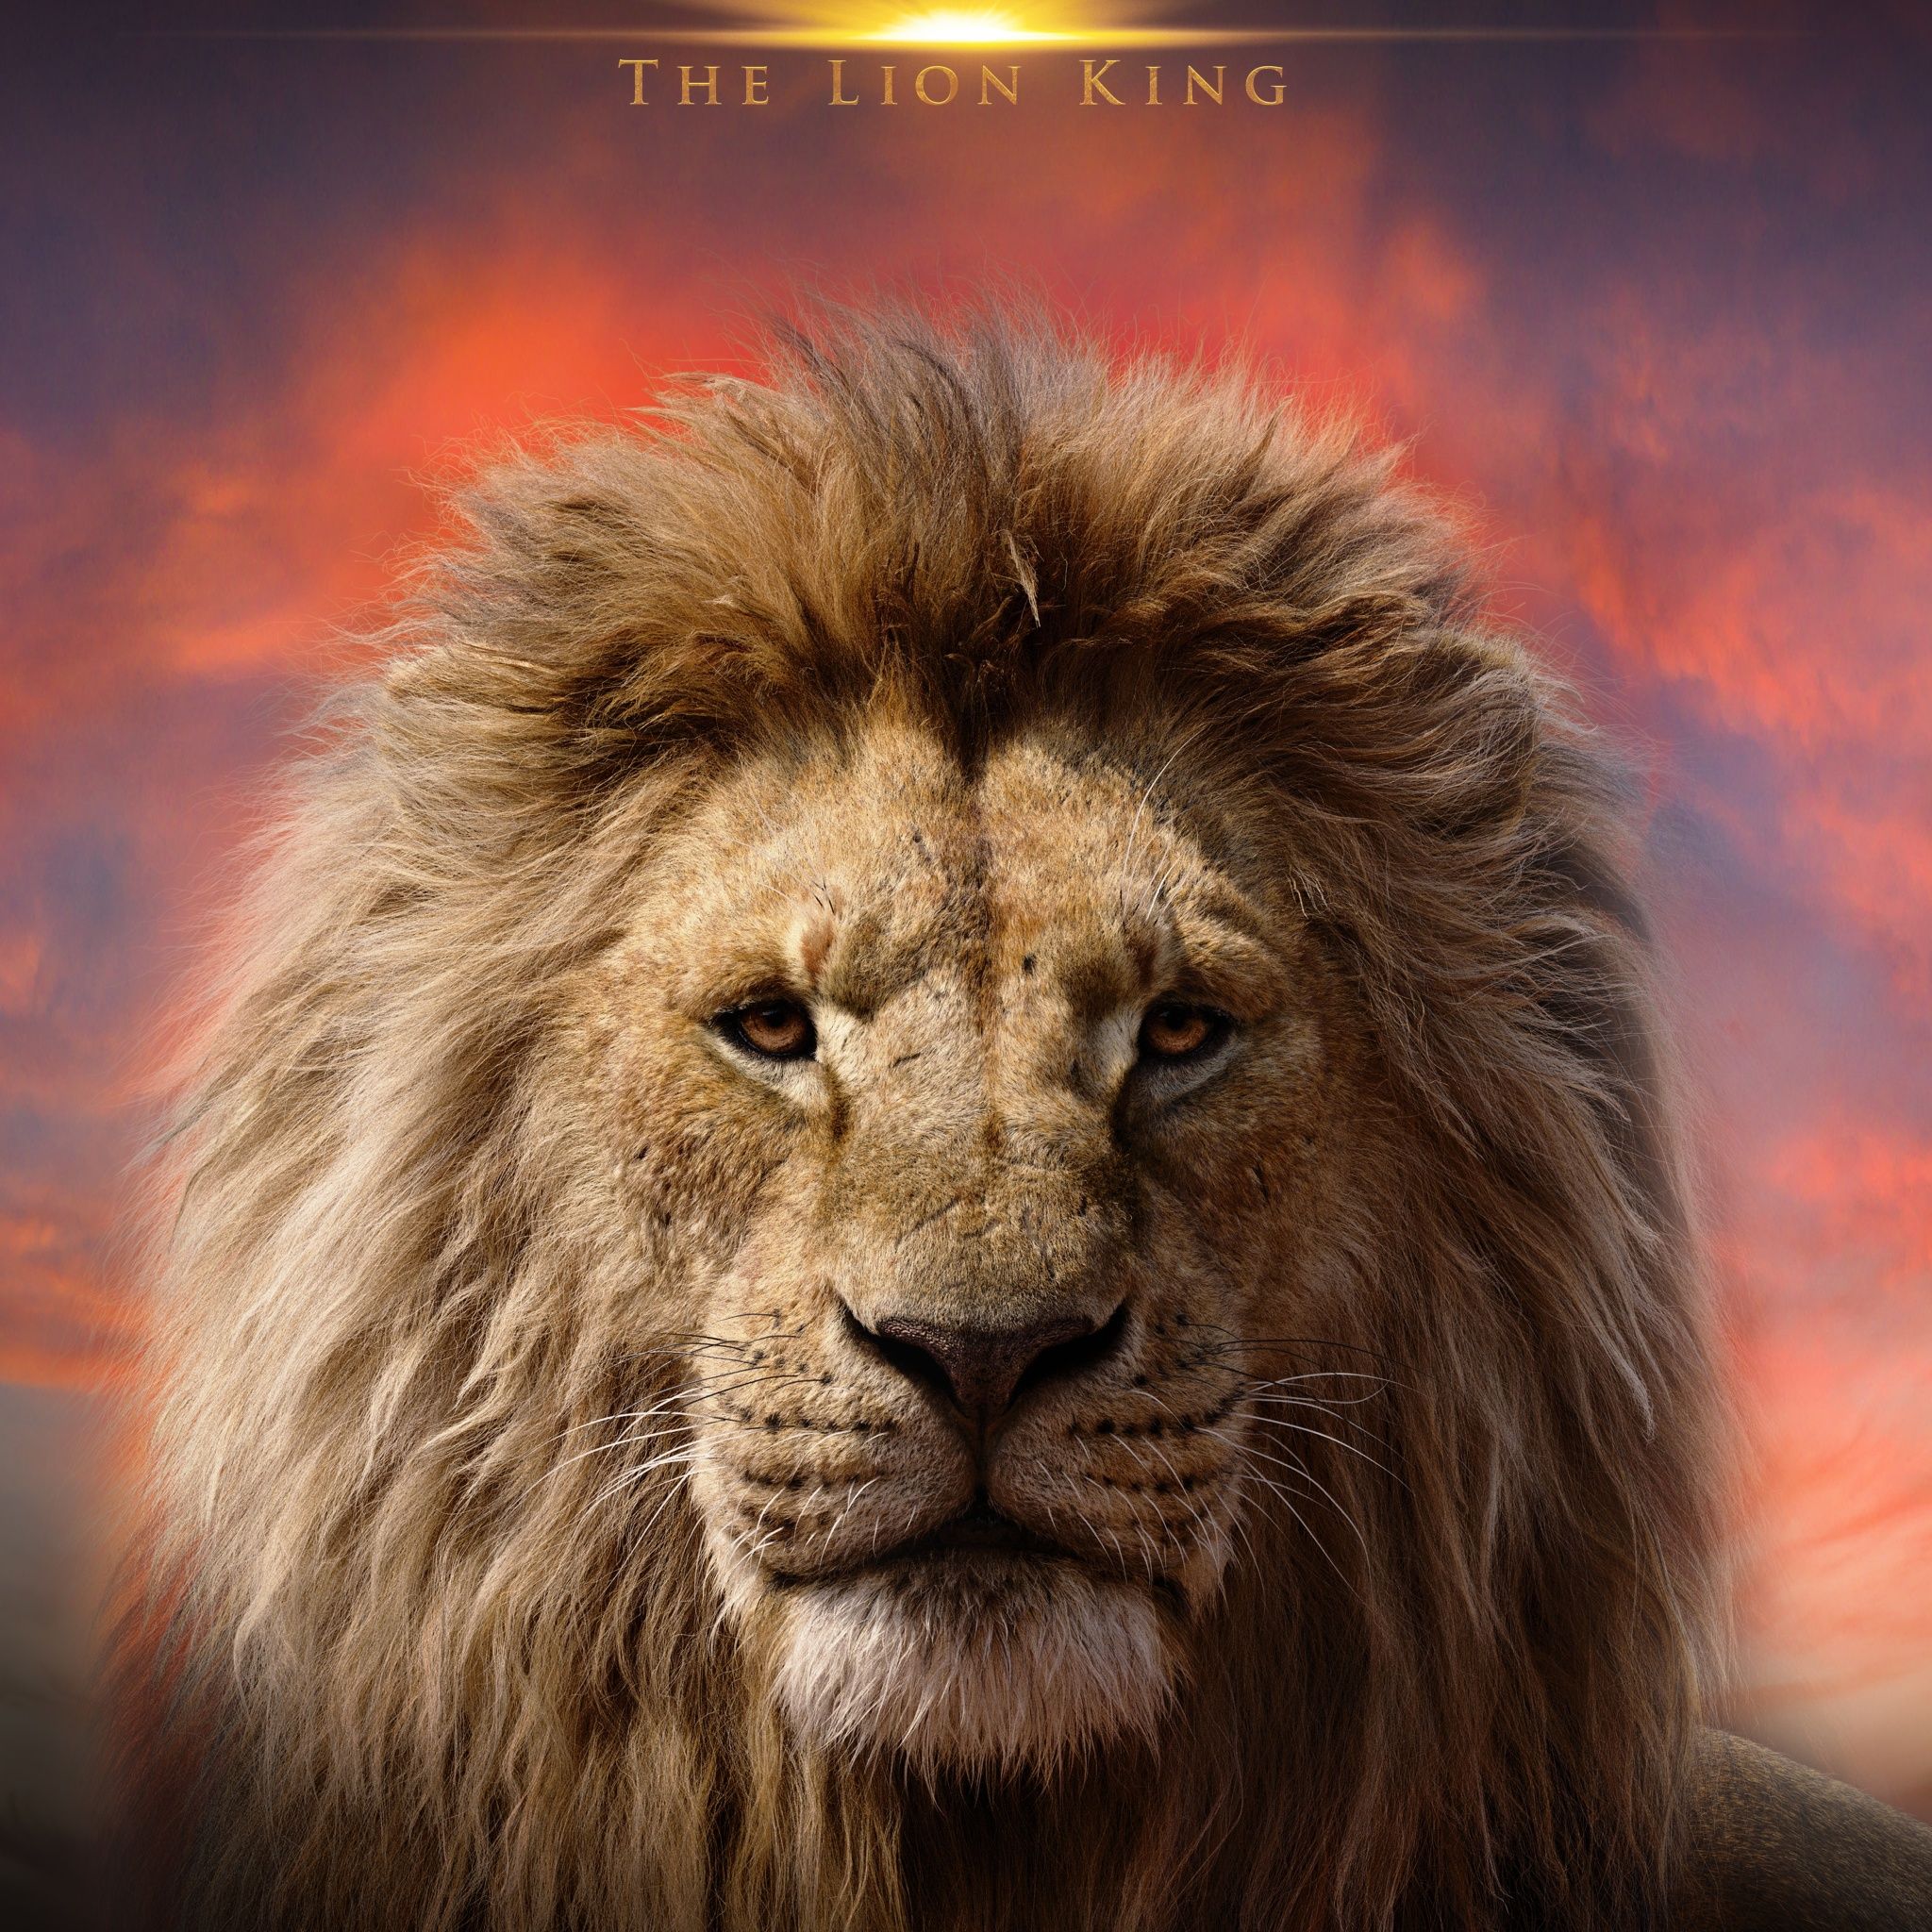 The Lion King (2019) - IMDb - The Lion King